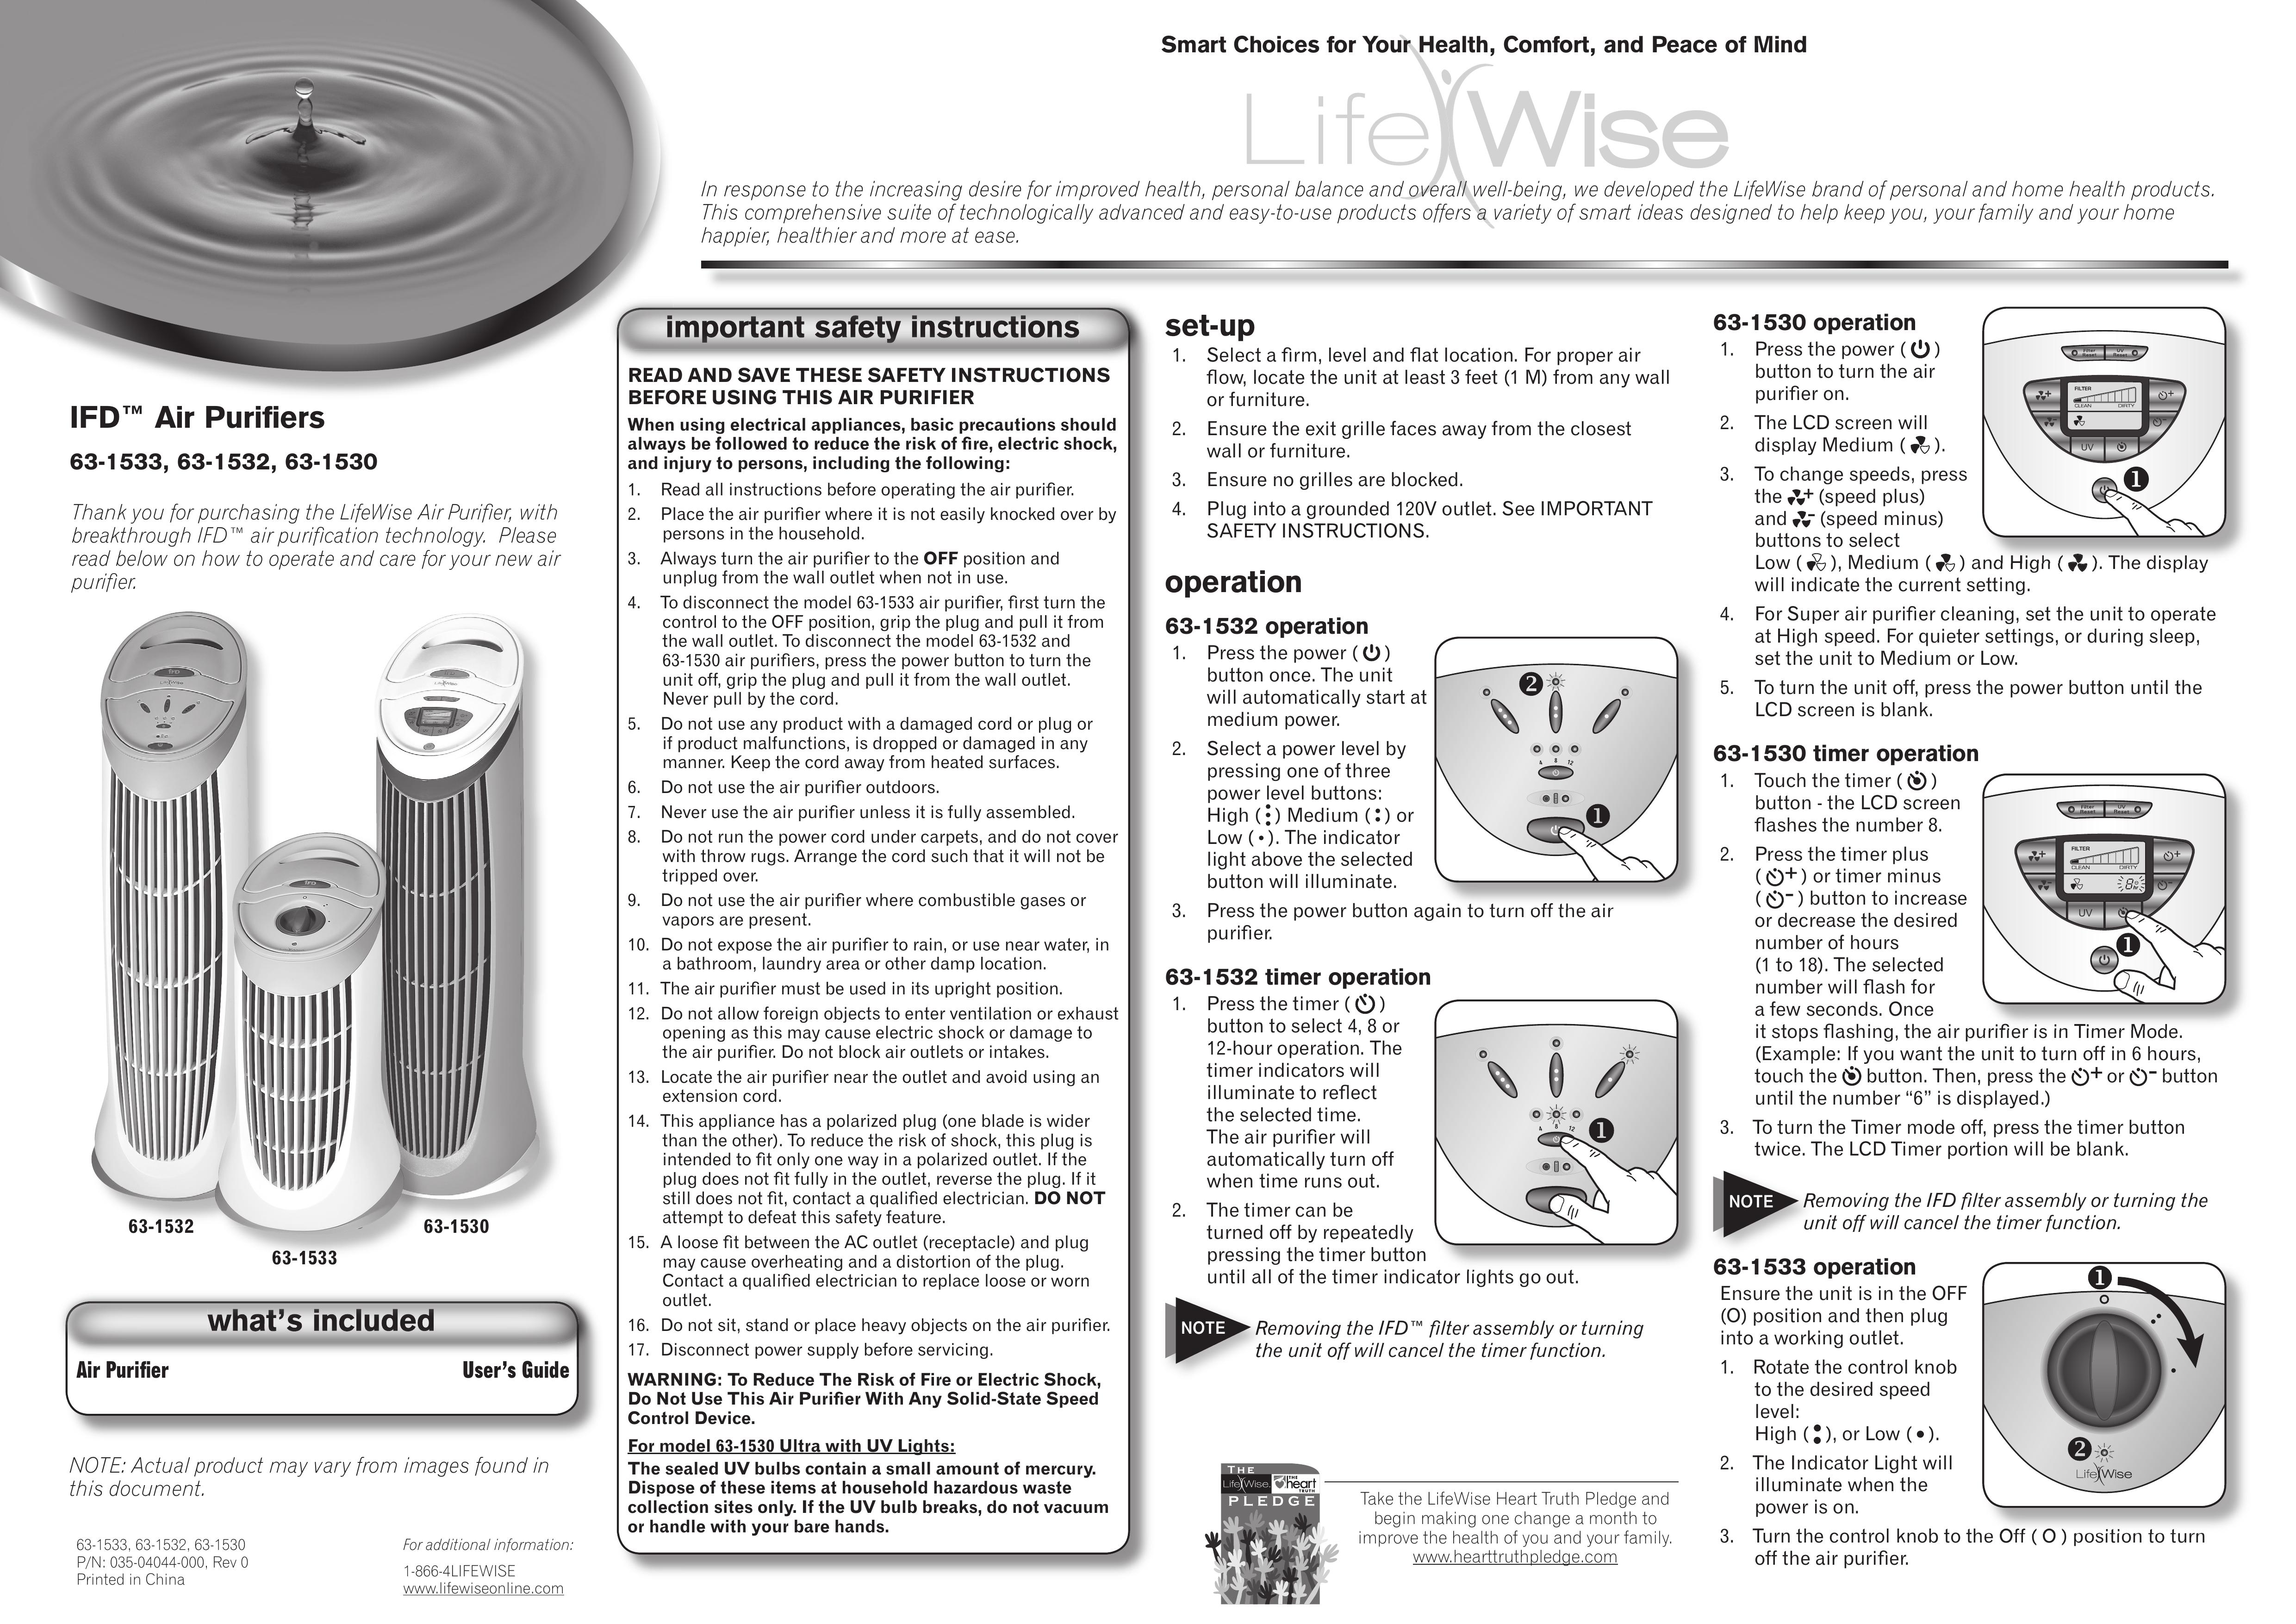 LifeWise 63-1530 Washer User Manual